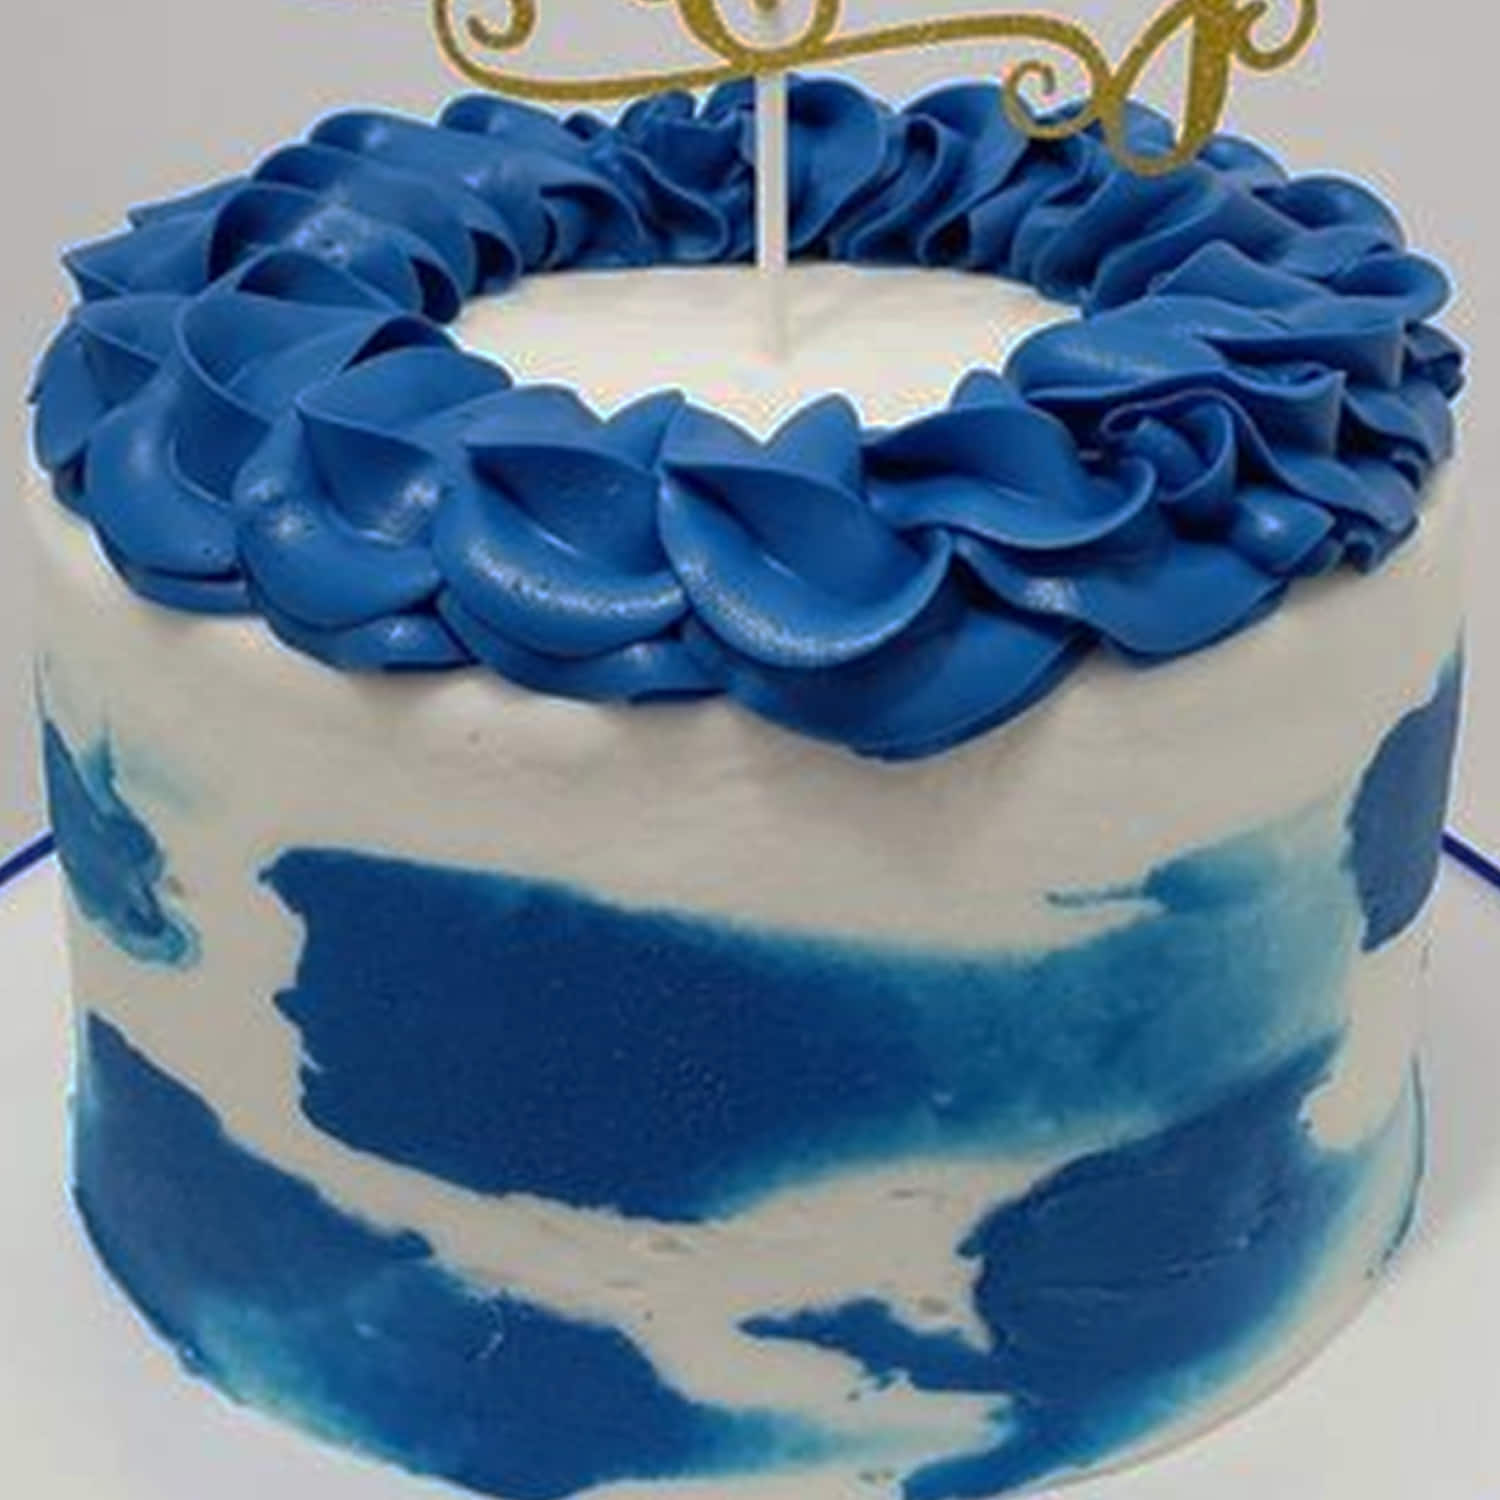 Buy Buttercream Blue Cake: Simple Elegance at Grace Bakery, Nagercoil